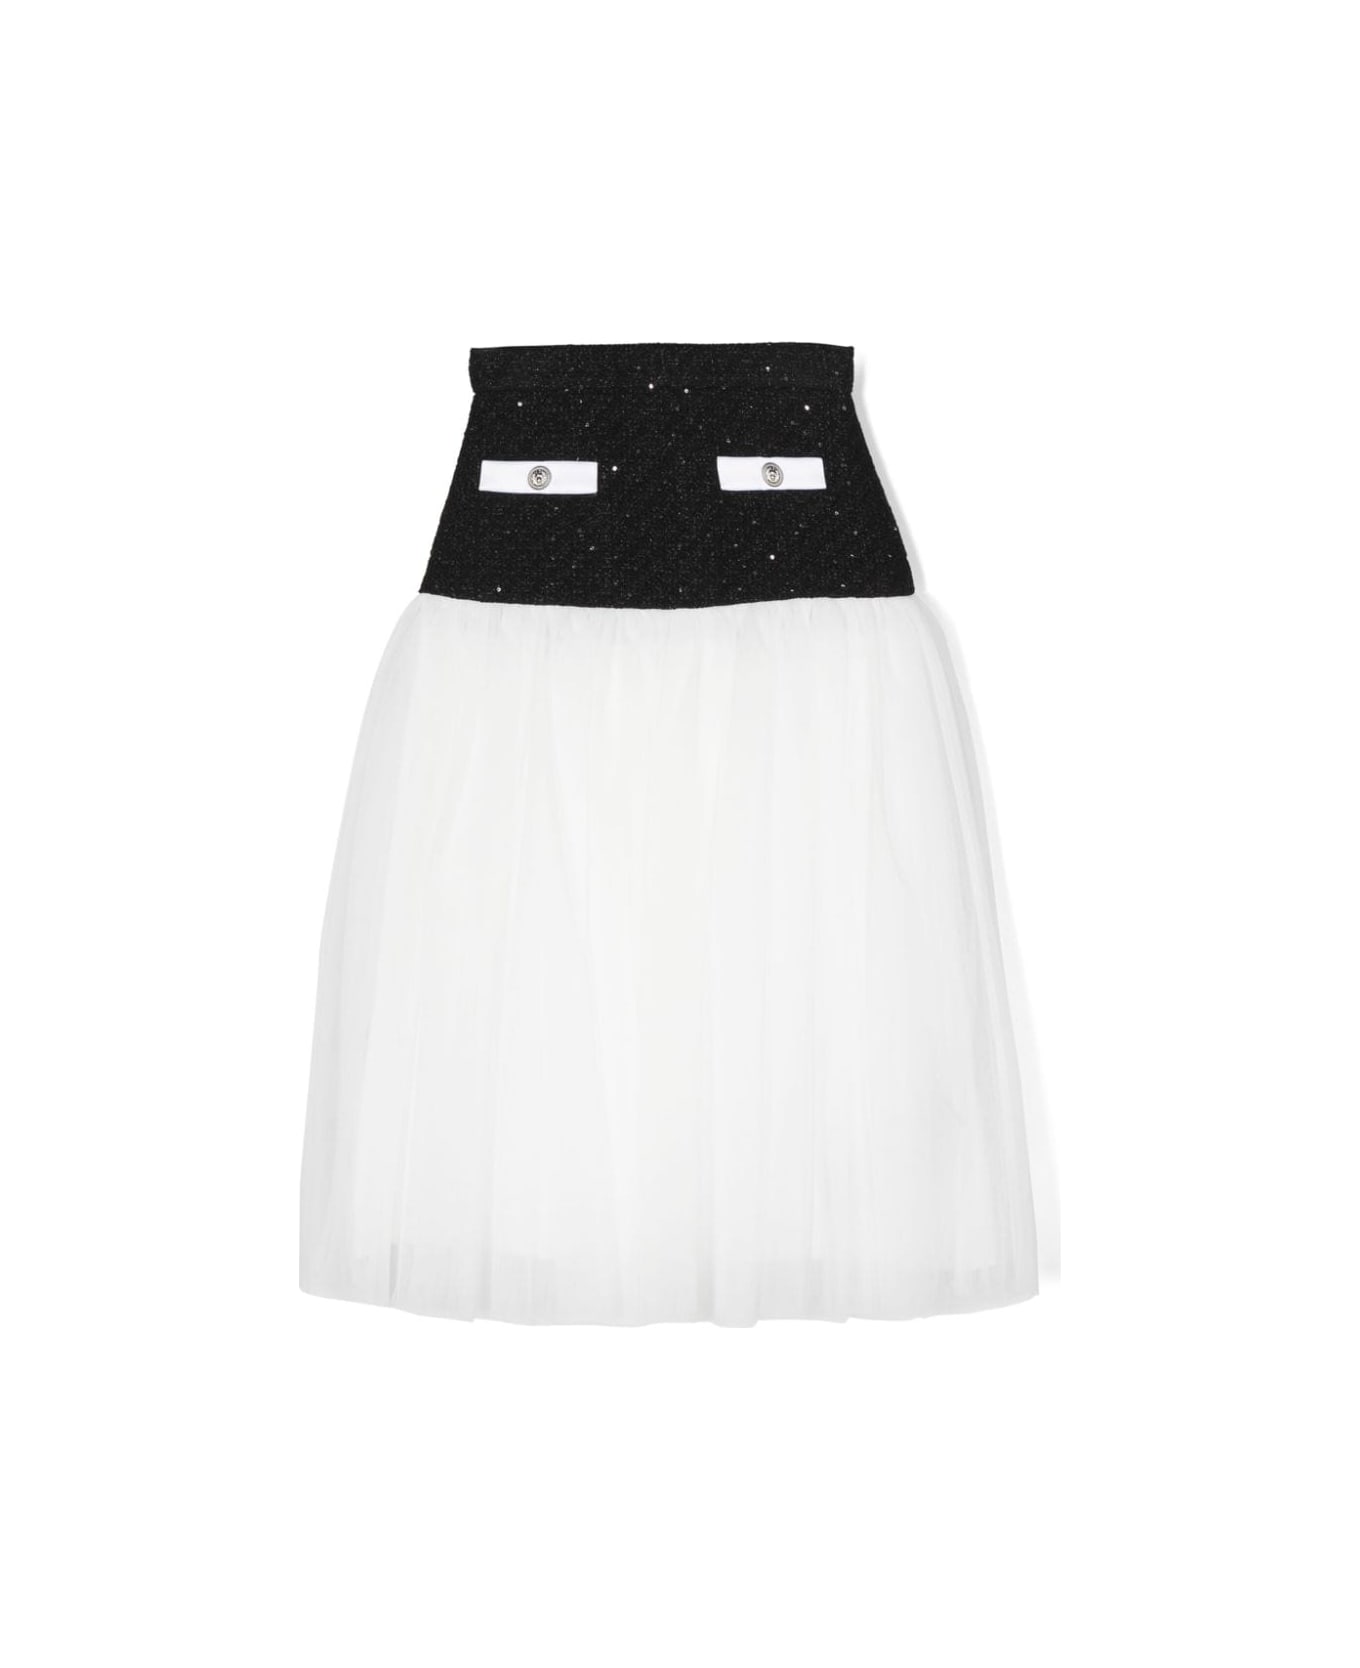 Balmain Skirt With Insert Design - Black ボトムス